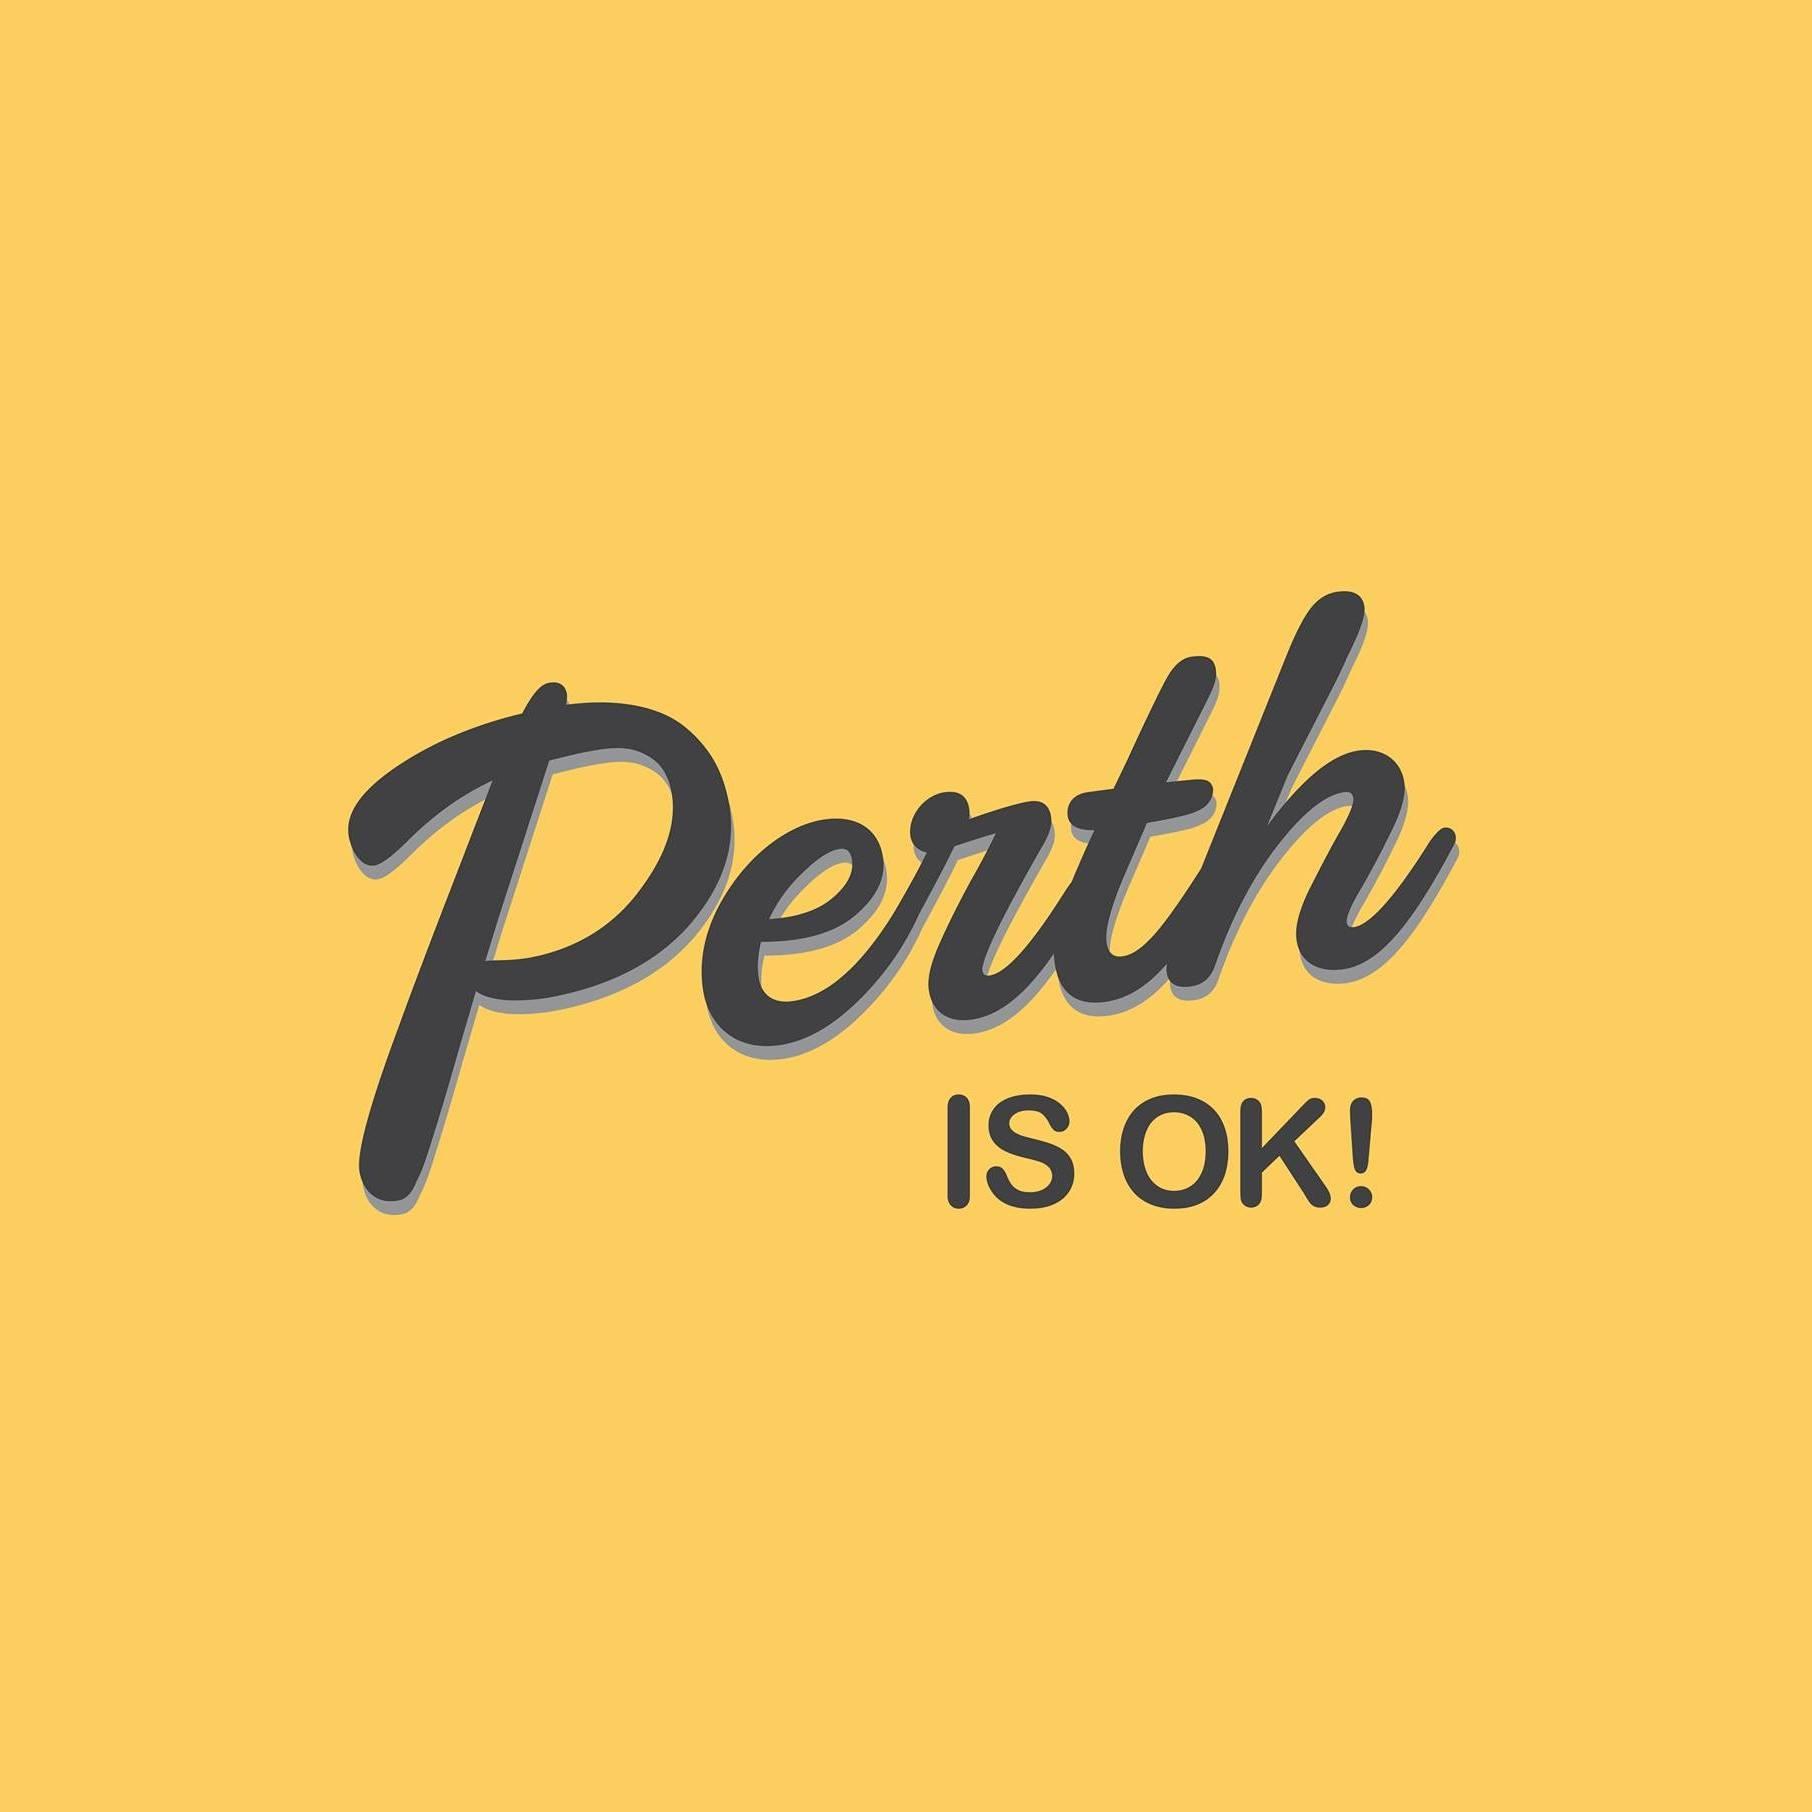 Perth Is OK!